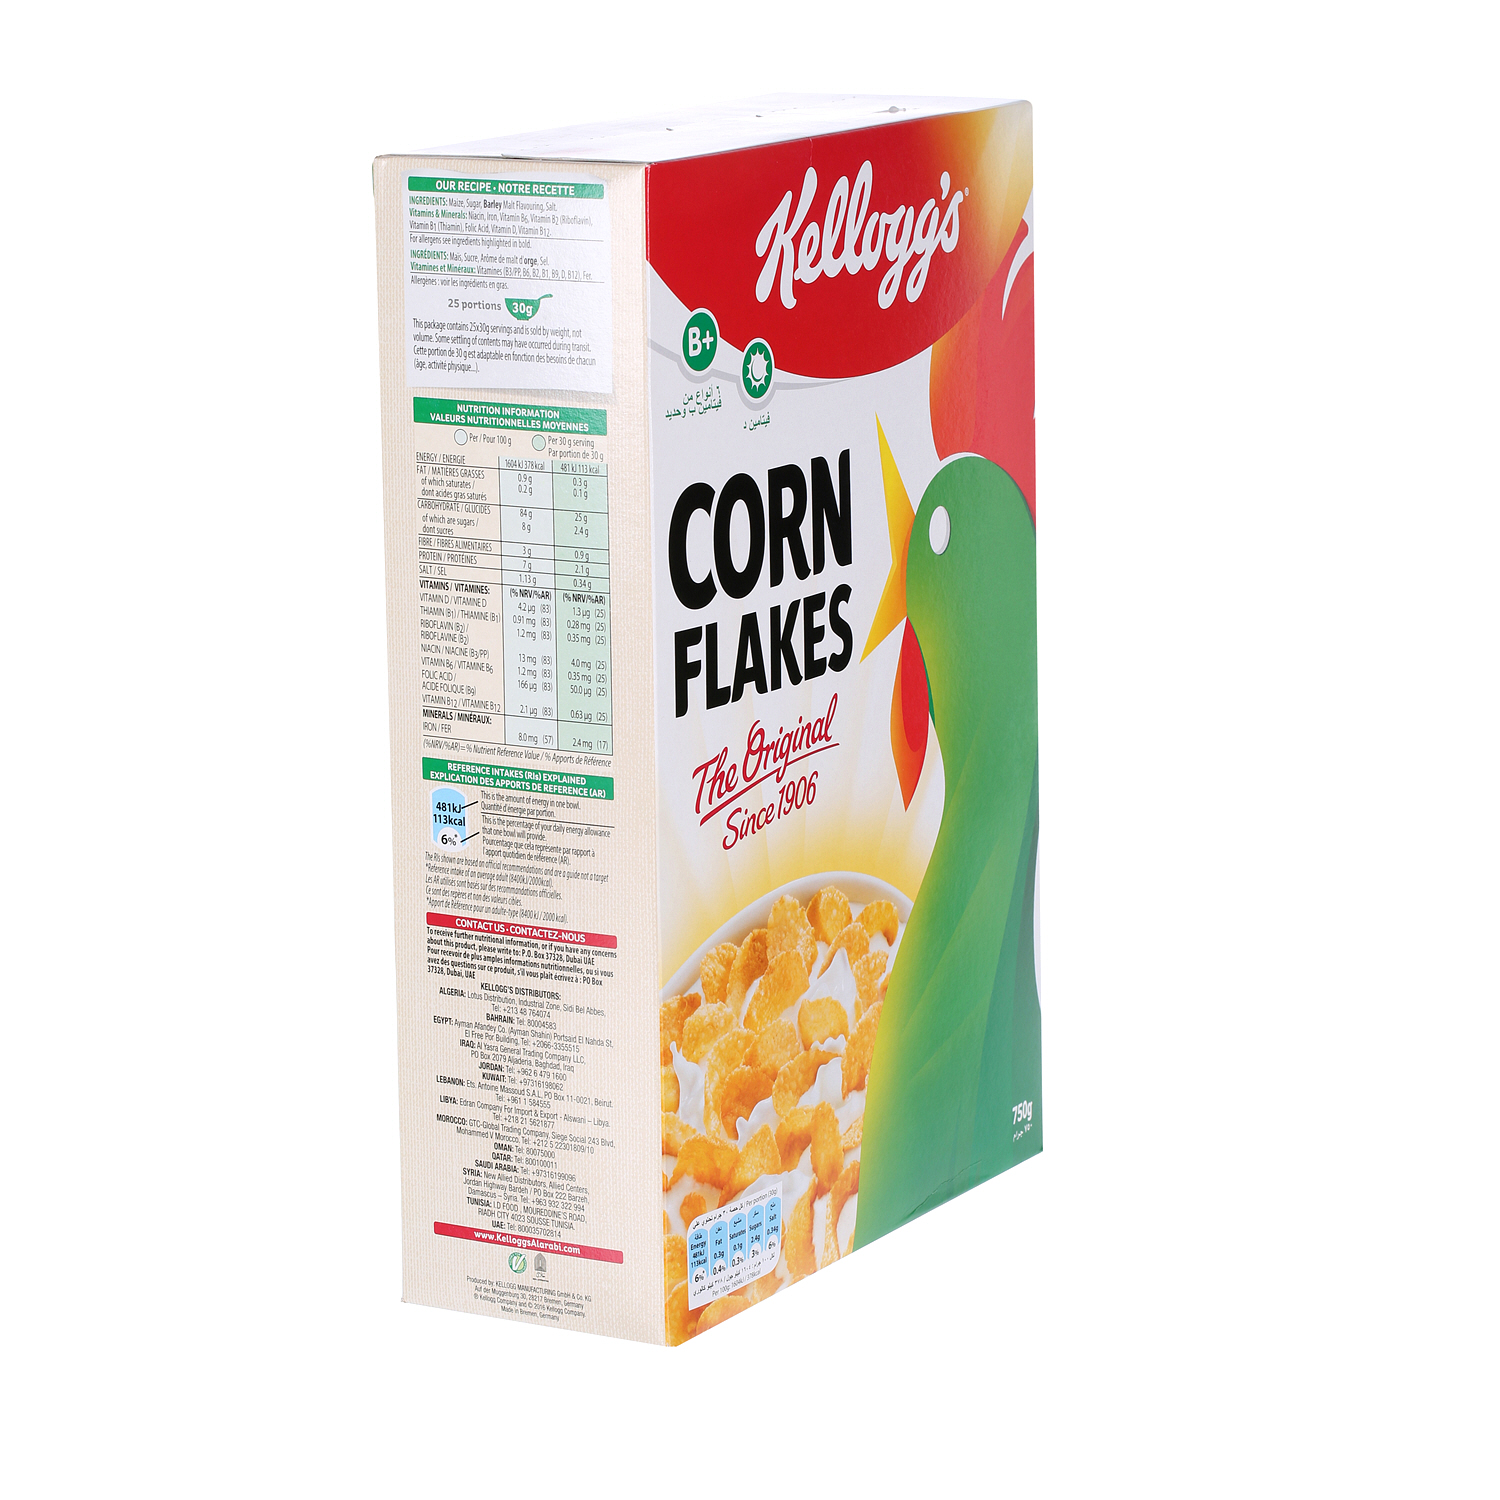 Kellogg's Corn Flakes Original 750 g